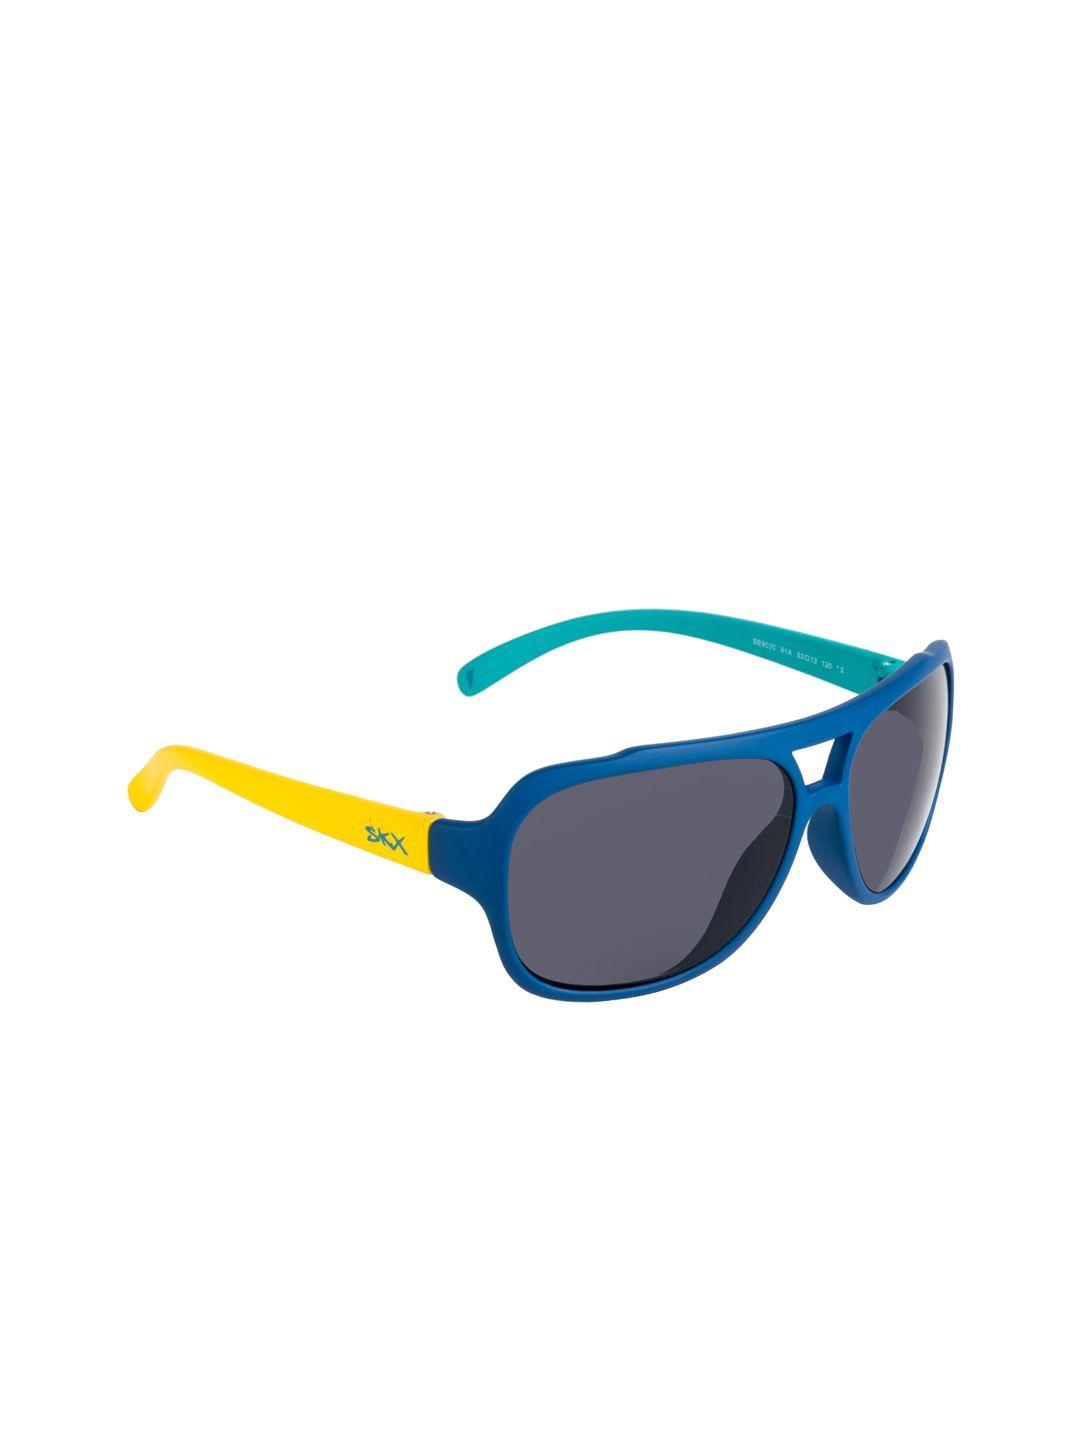 skechers-men-rectangle-sunglasses-se9030-53-91a